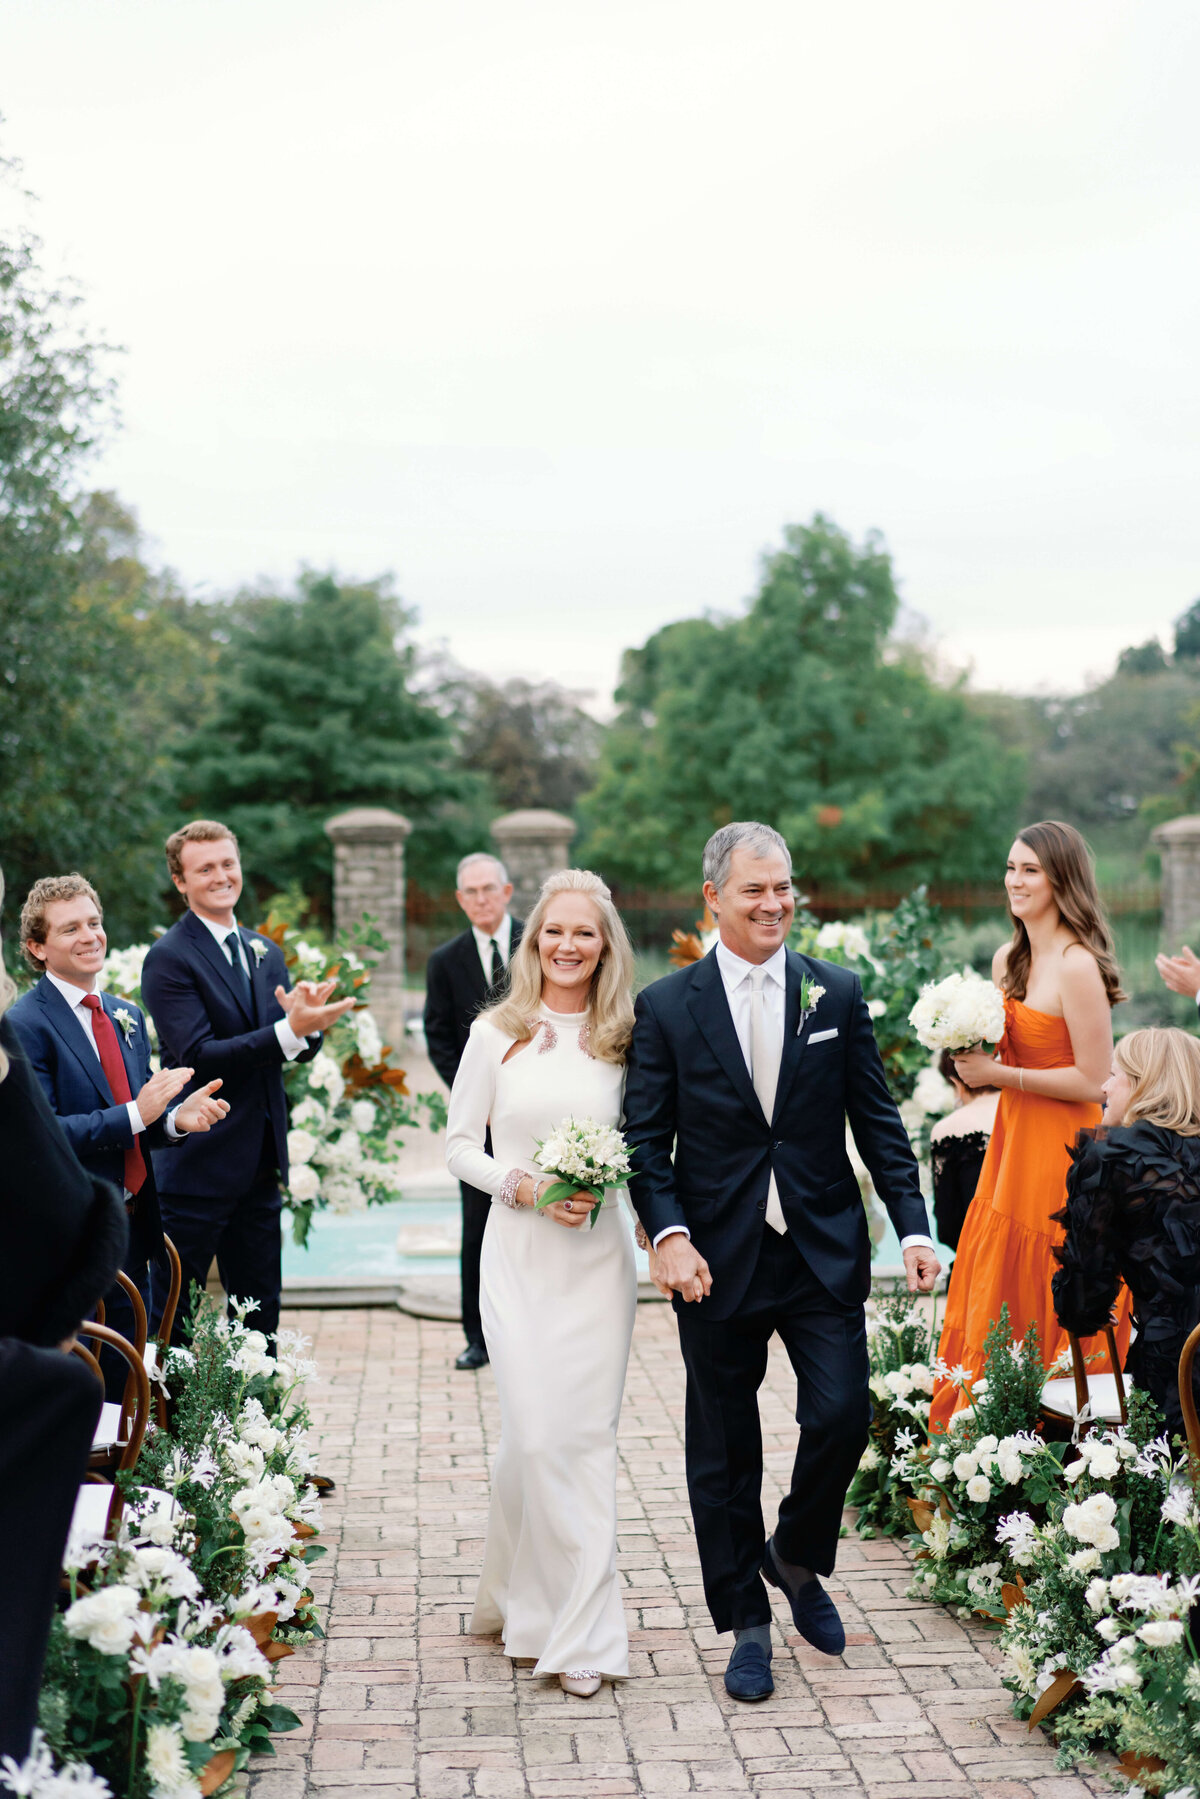 austin-wedding-commodore-perry-estate-luxury-reception-julie-wilhite-photography-37